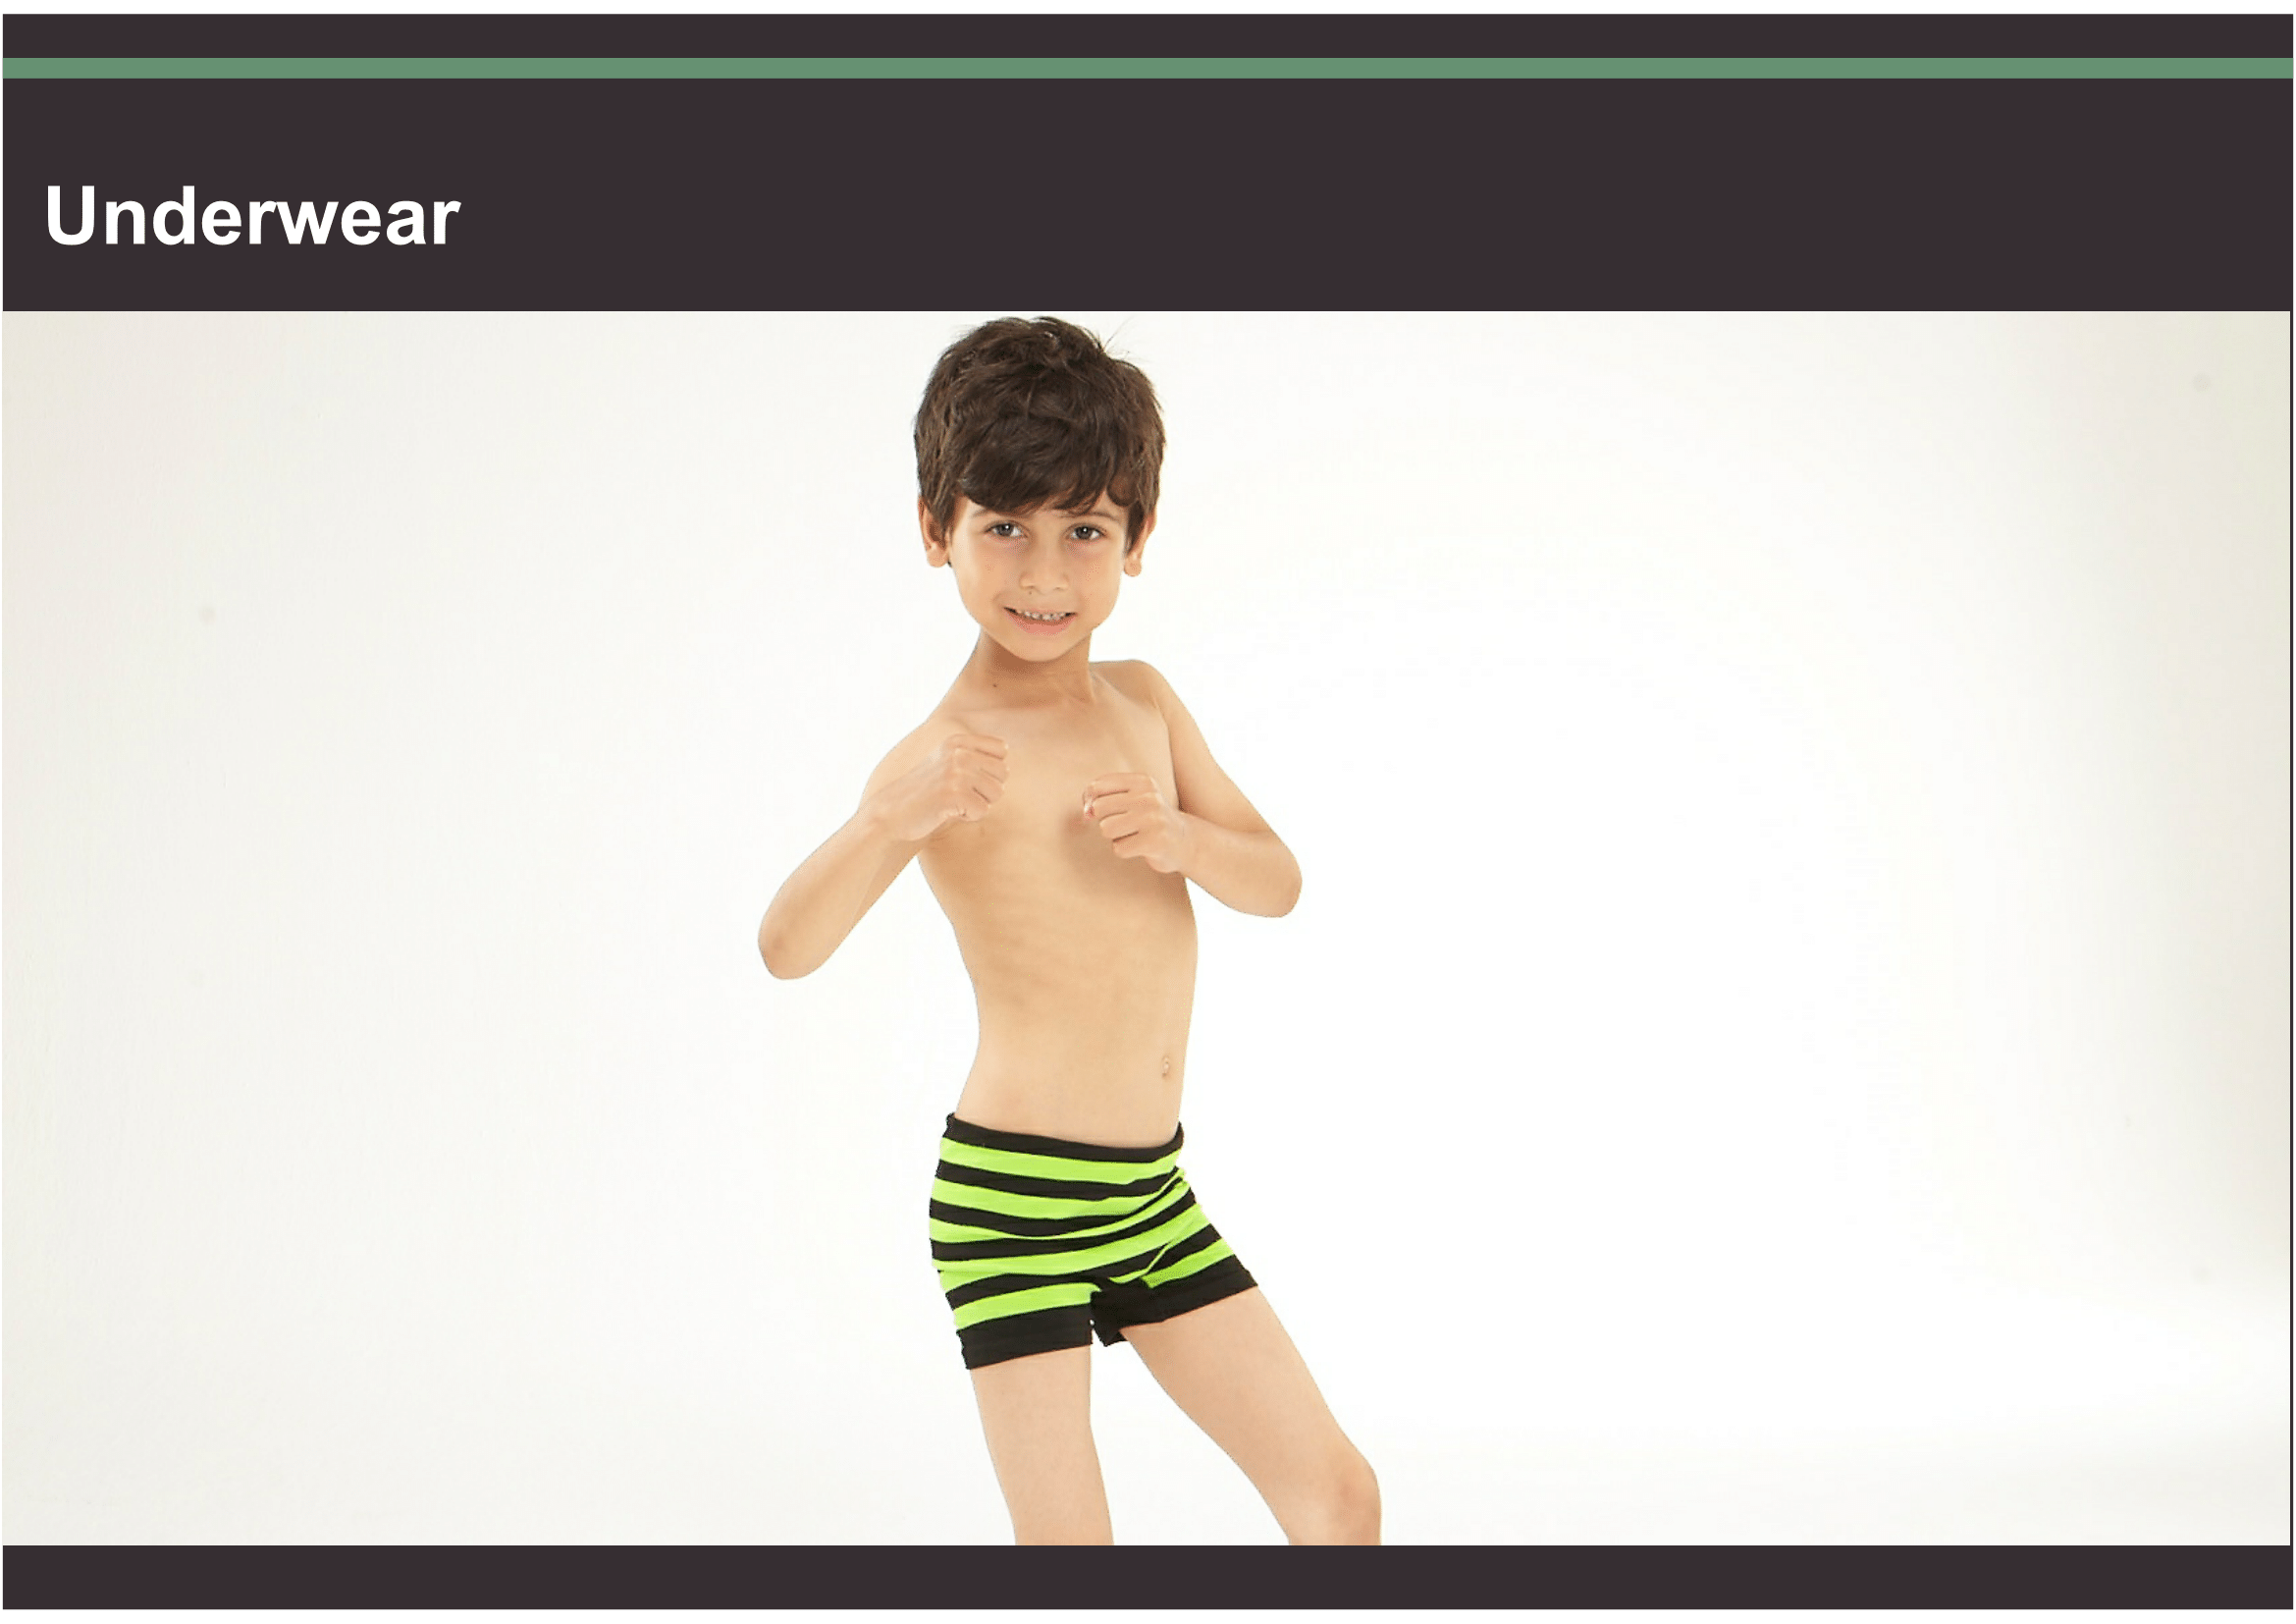 Children's underwear - buy in bulk on Qoovee Market